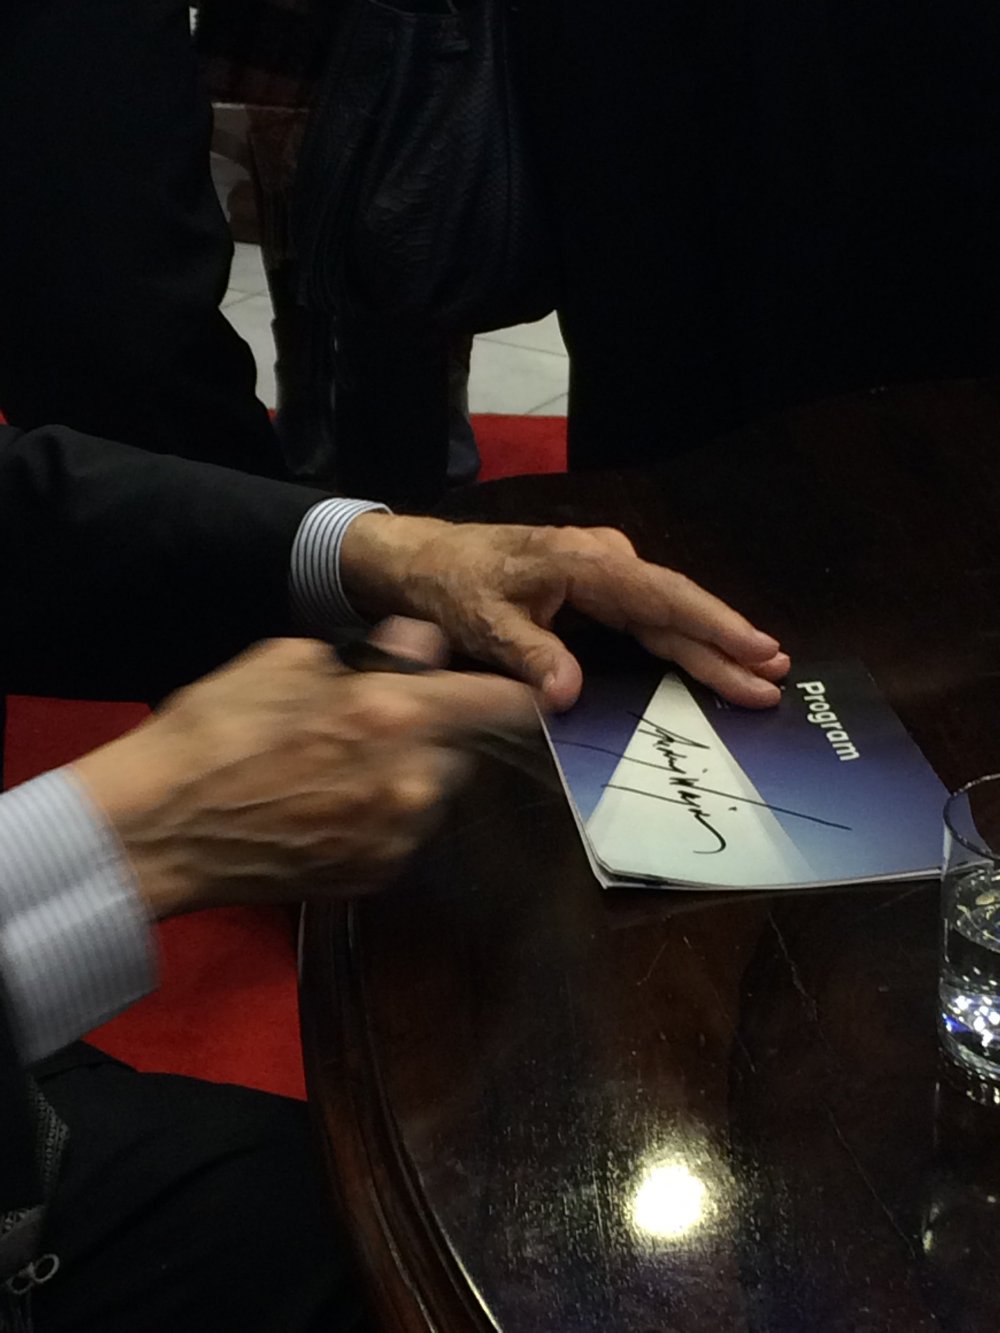 Andrzej Wajda writing his signature